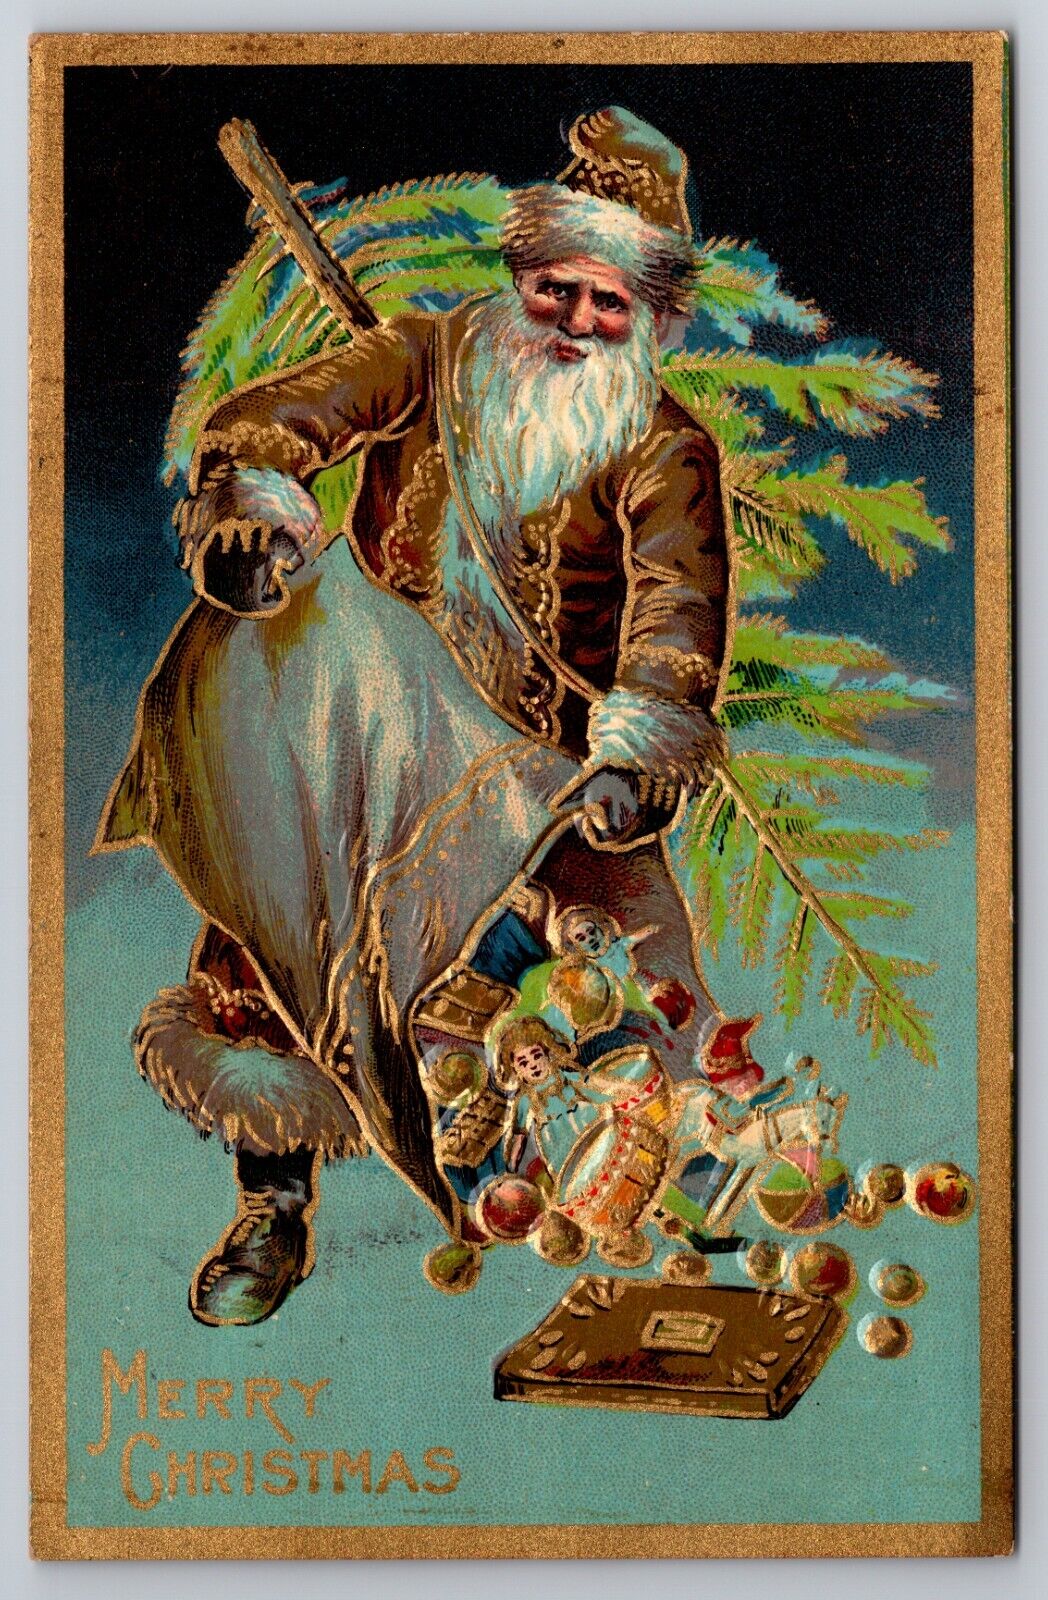 Merry Christmas Old World Santa Claus Brown Robe Toys c1910 Postcard